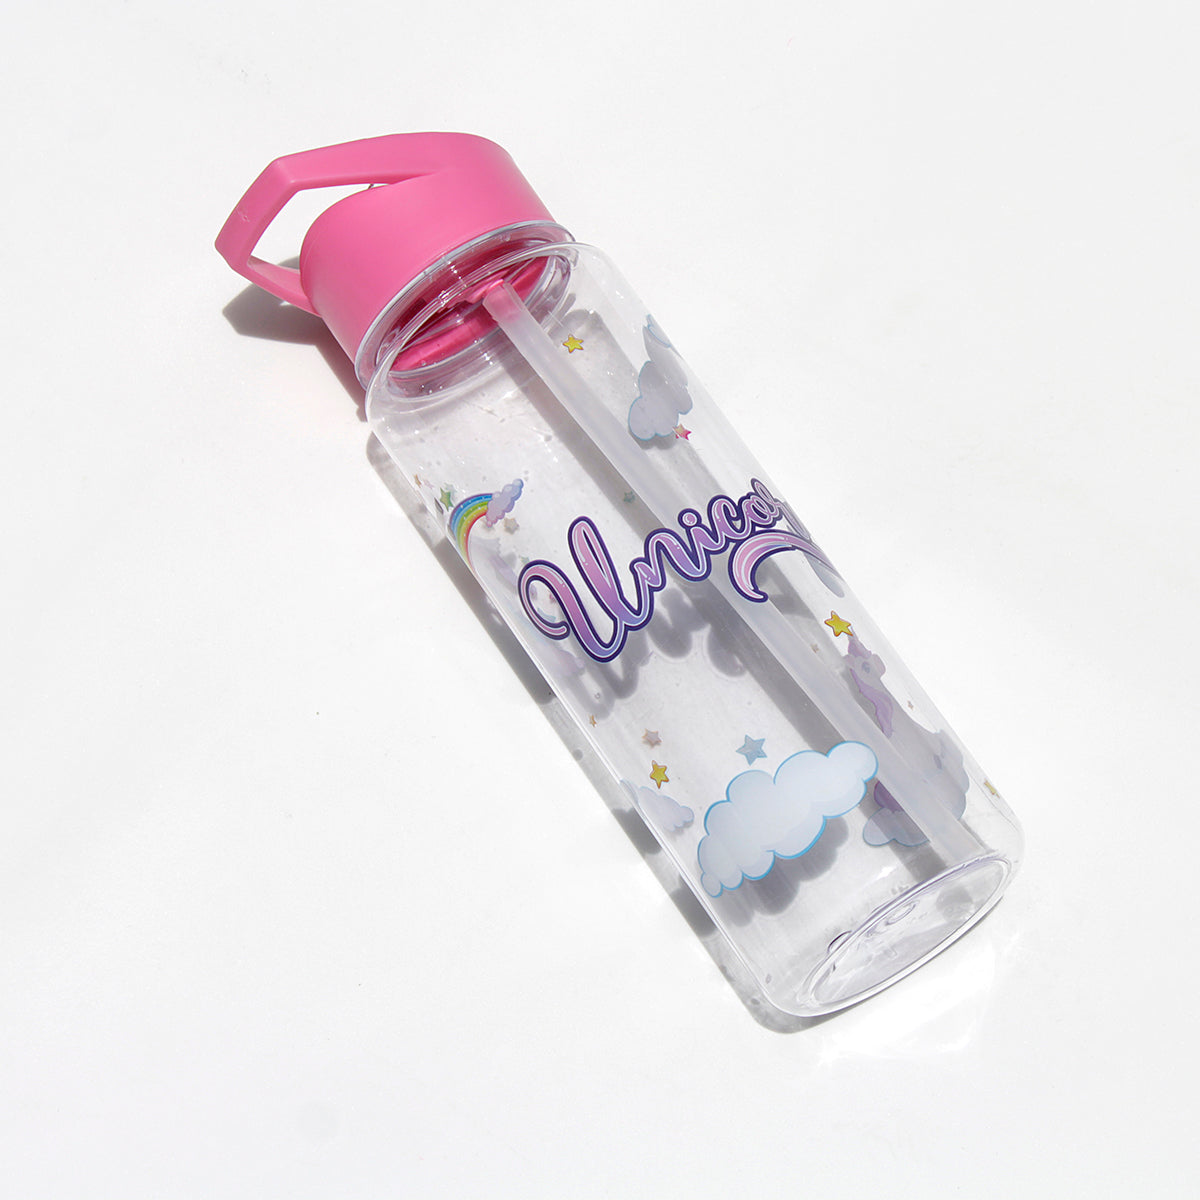 Botella Peschelle Infantil Con Diseño de Unicornio